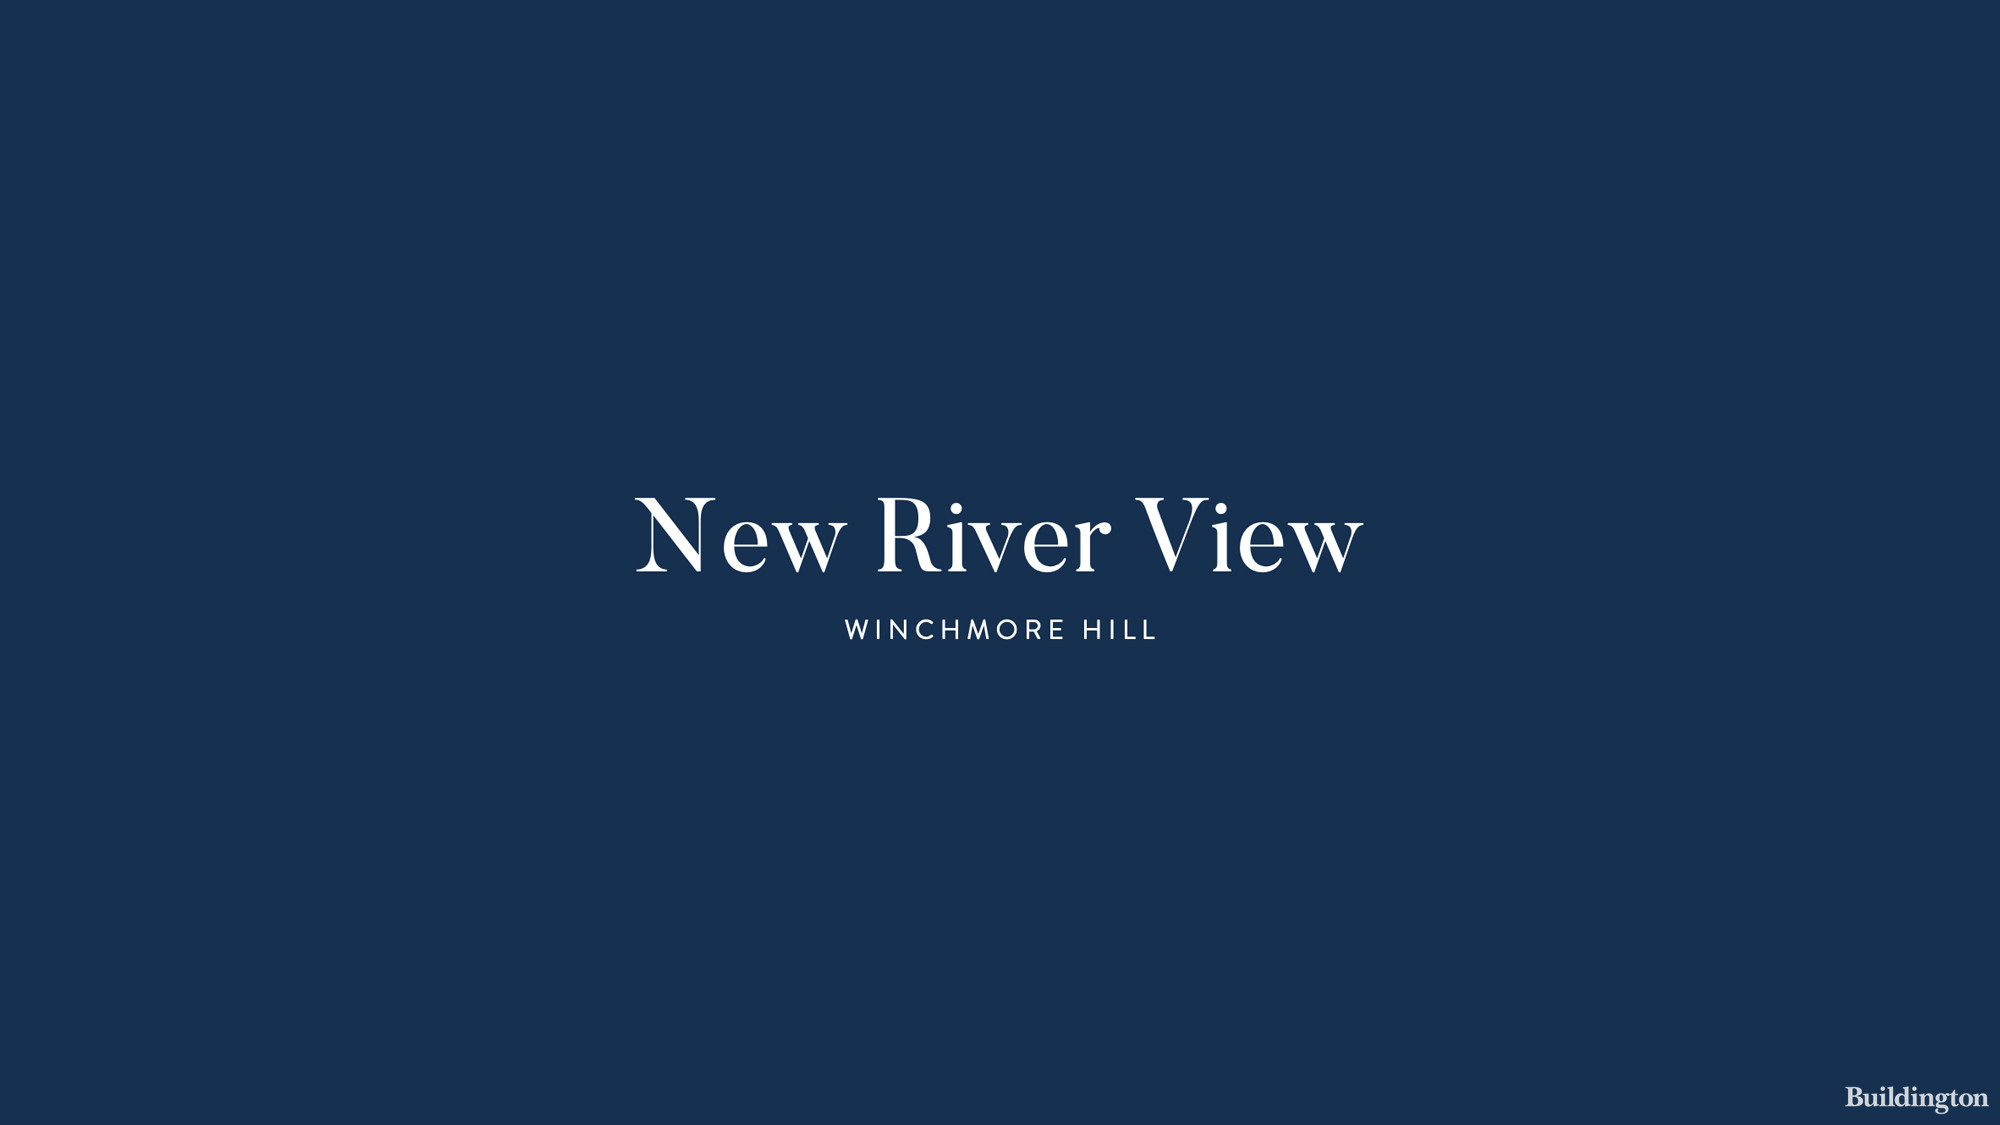 New River View development in Winchmore Hill, London N21, by Dandara